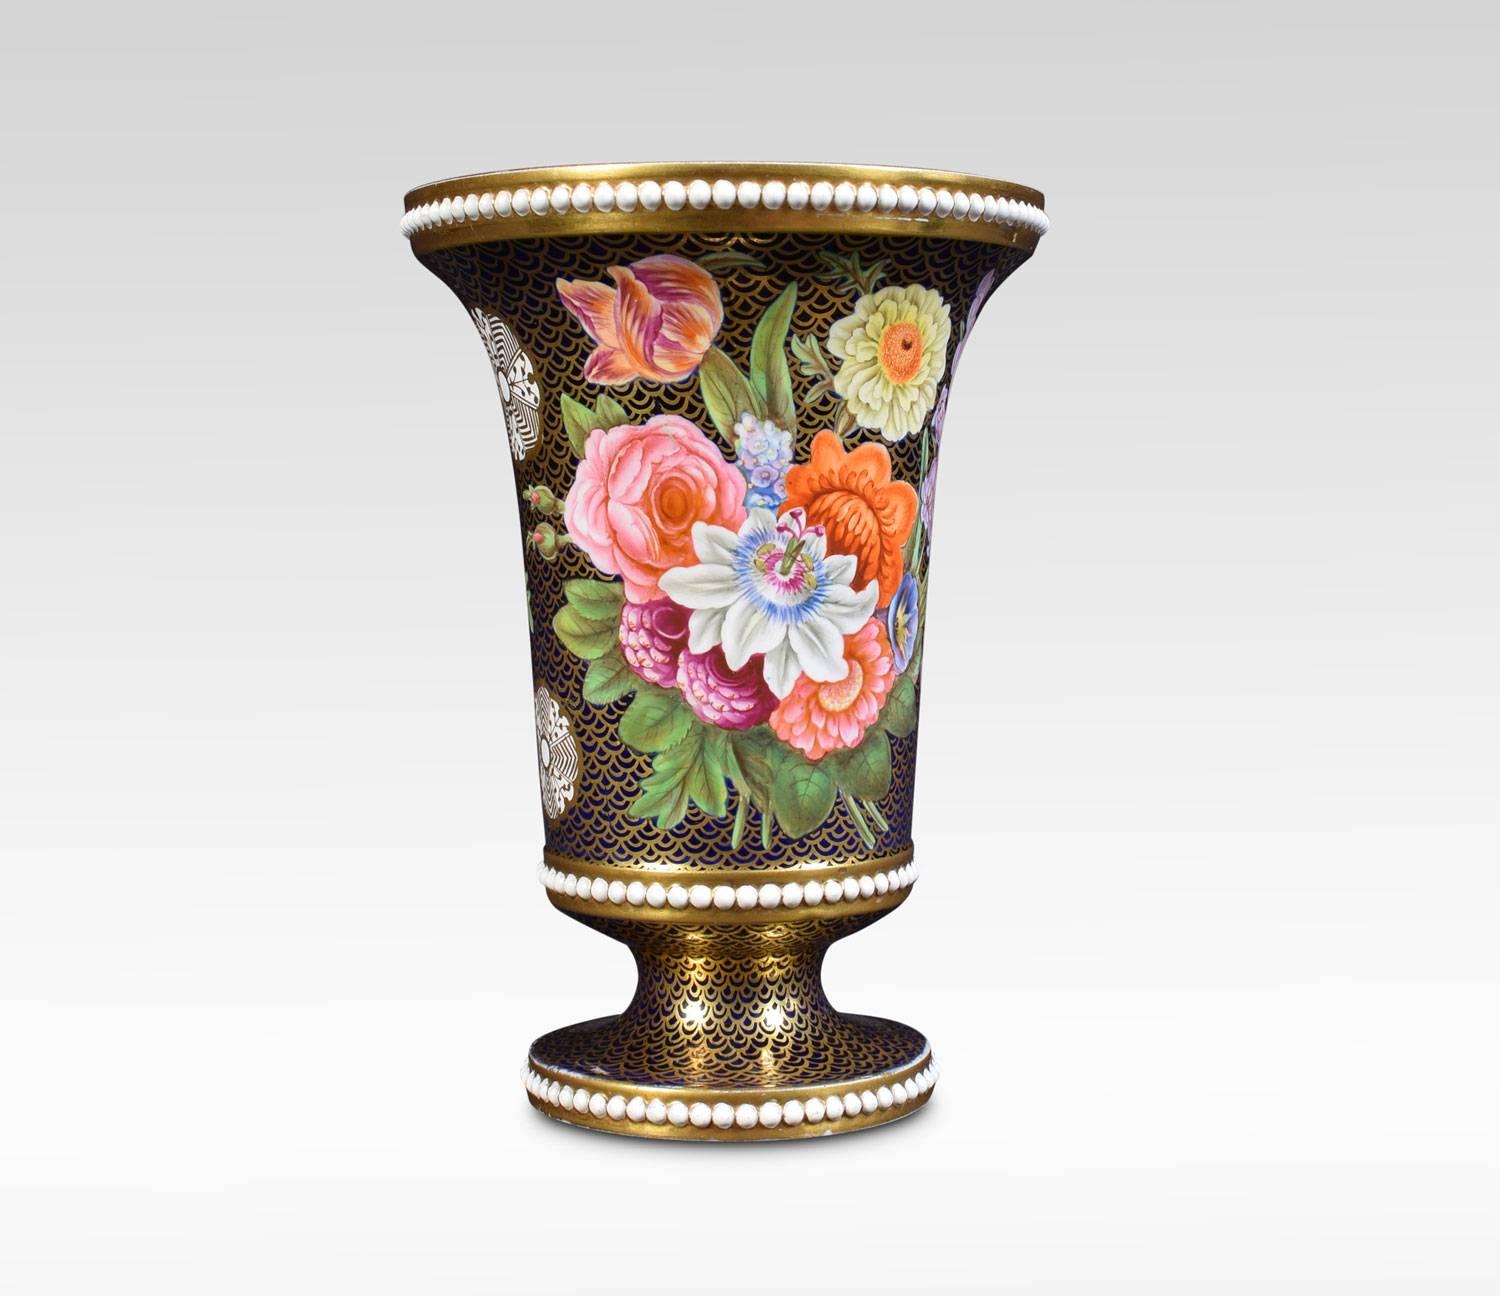 British Regency Period Spode Porcelain Spill Vase